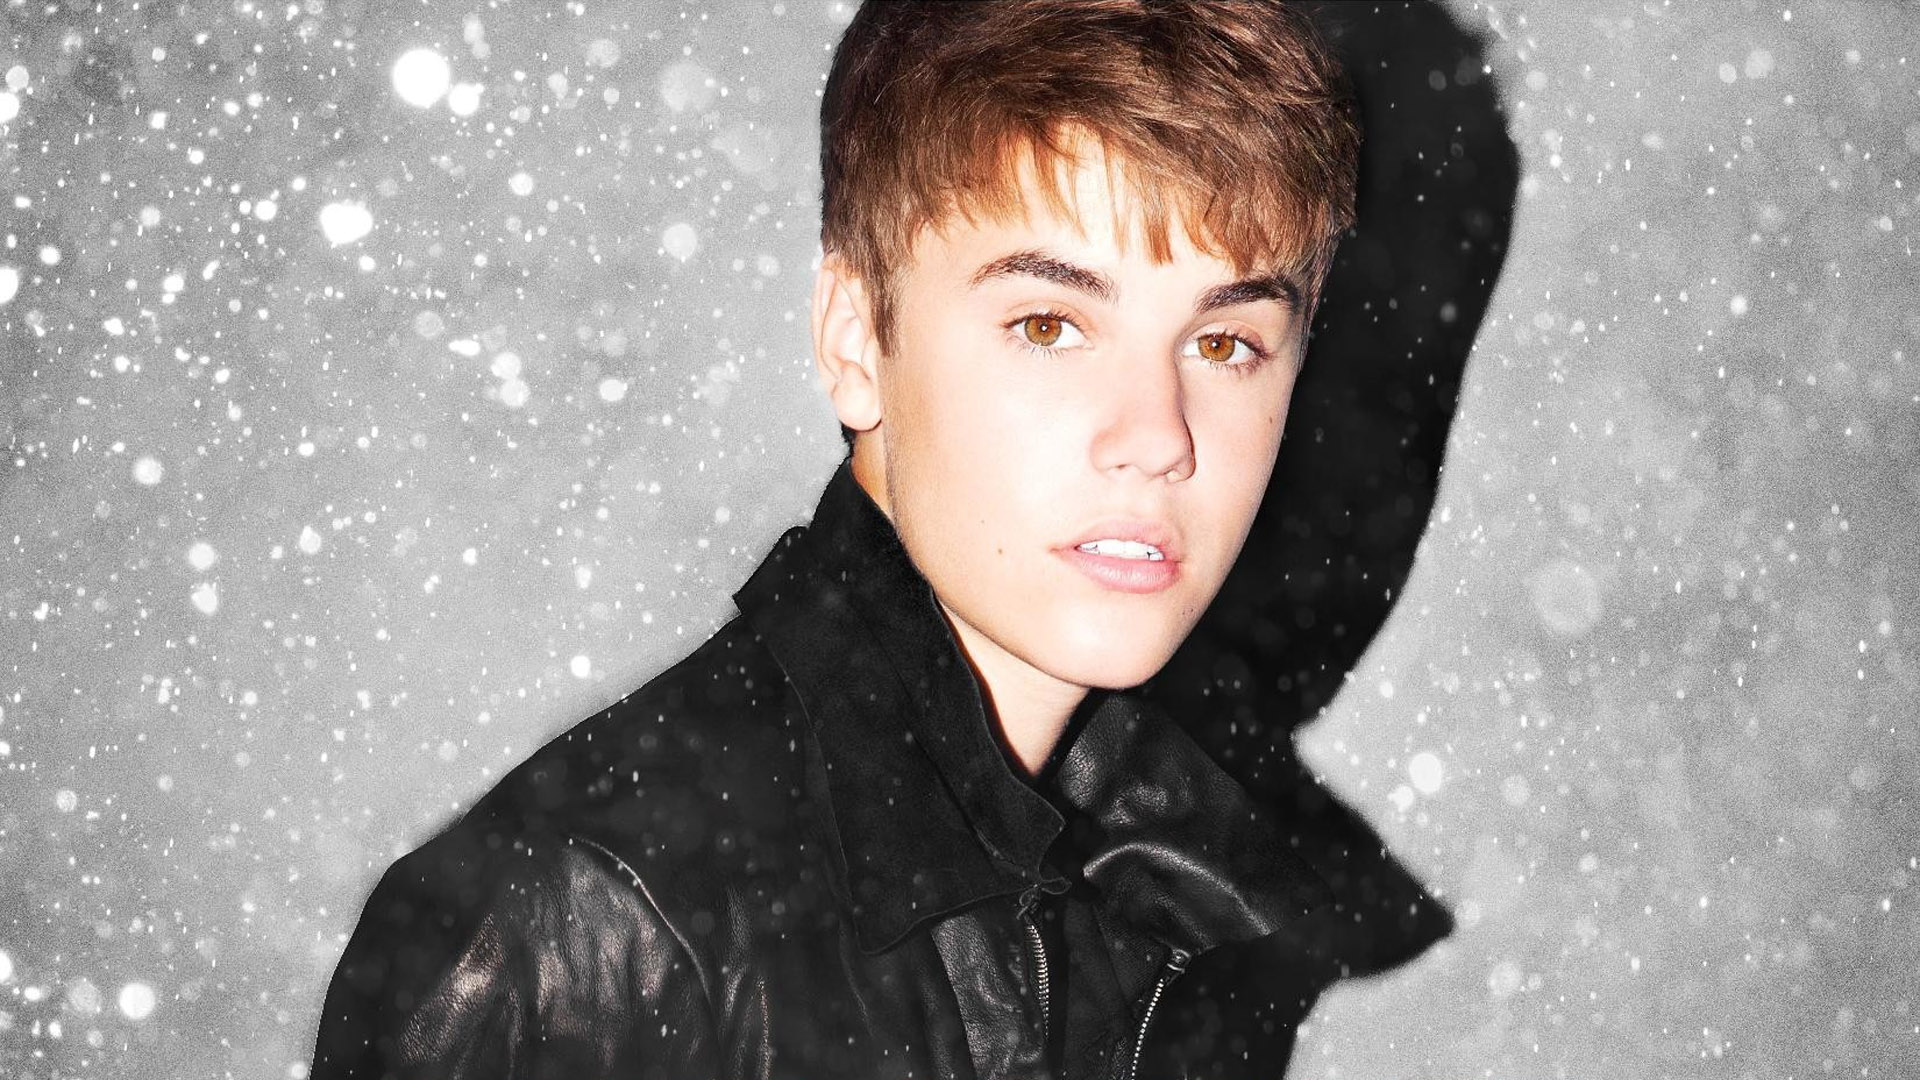 Justin Bieber Wallpaper Desktop Image